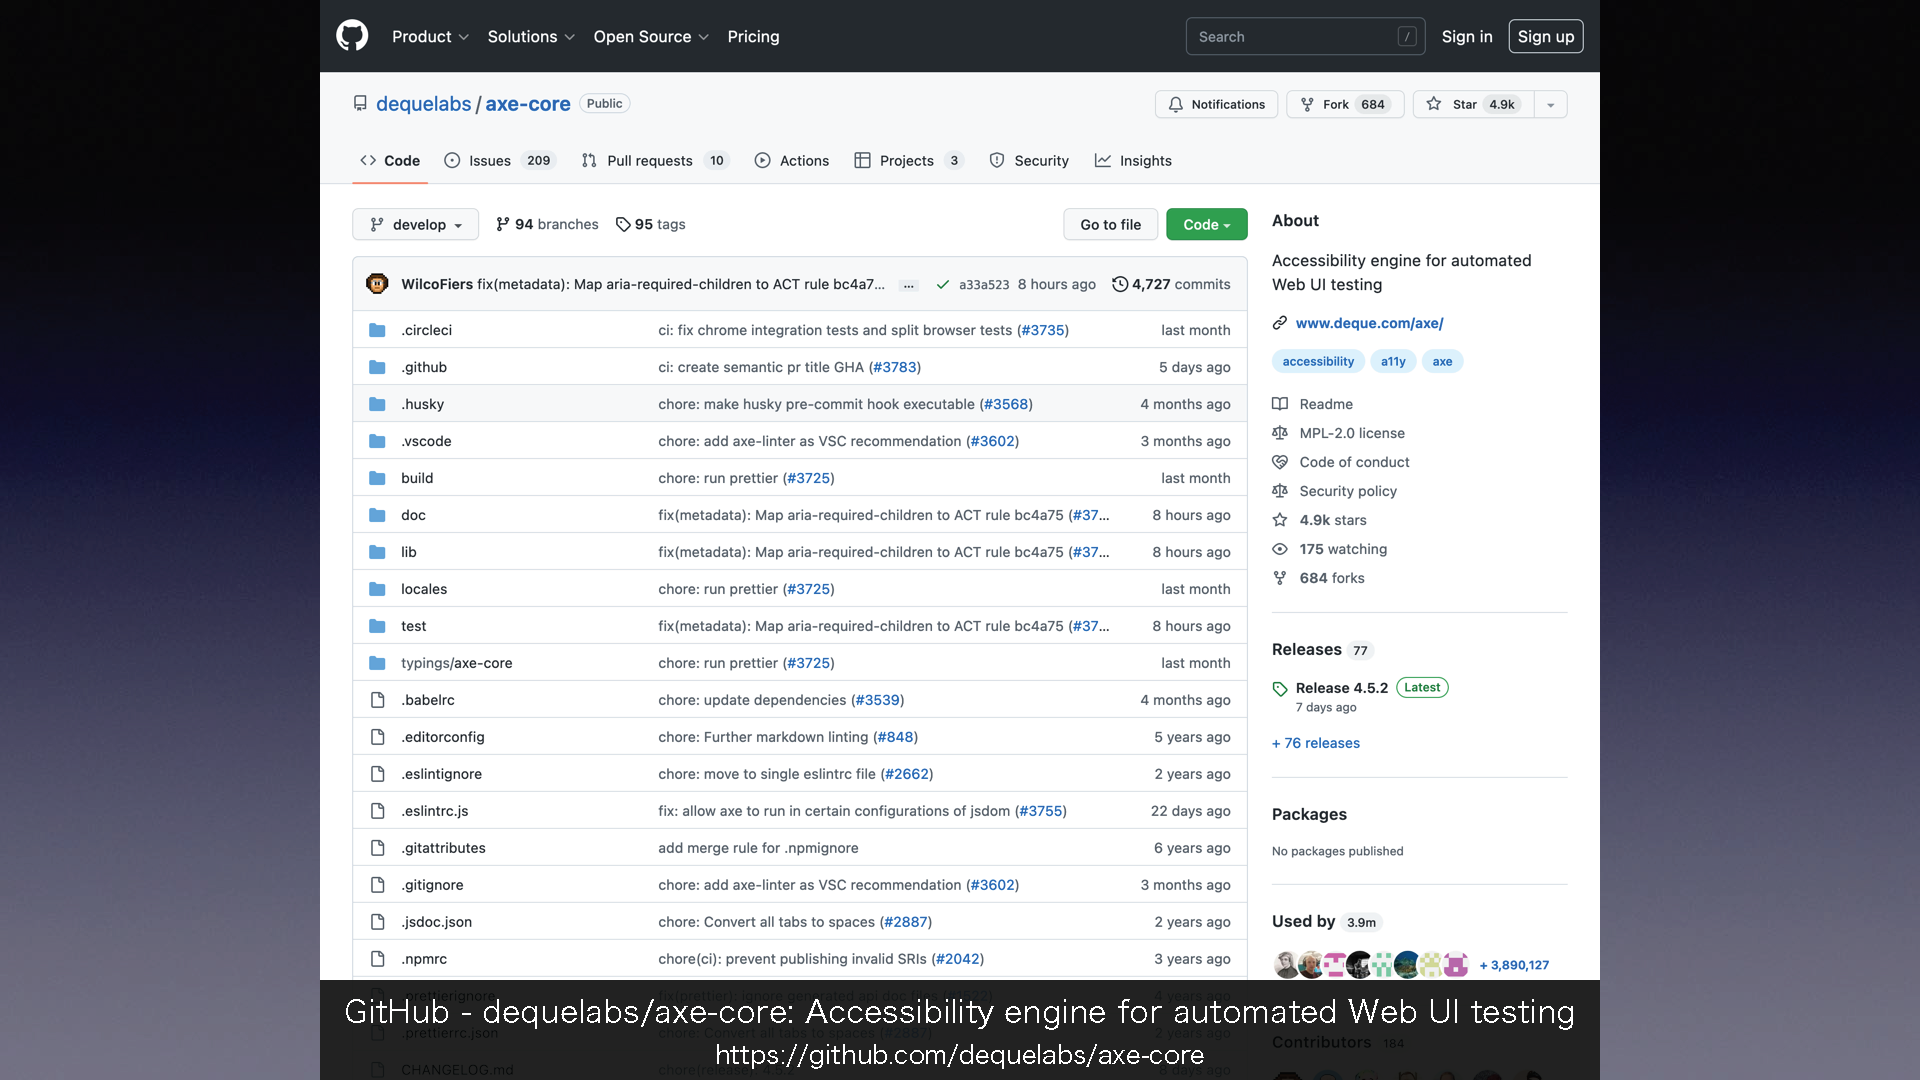 「GitHub - dequelabs/axe-core: Accessibility engine for automated Web UI testing」について掲載されたウェブページの画像
	